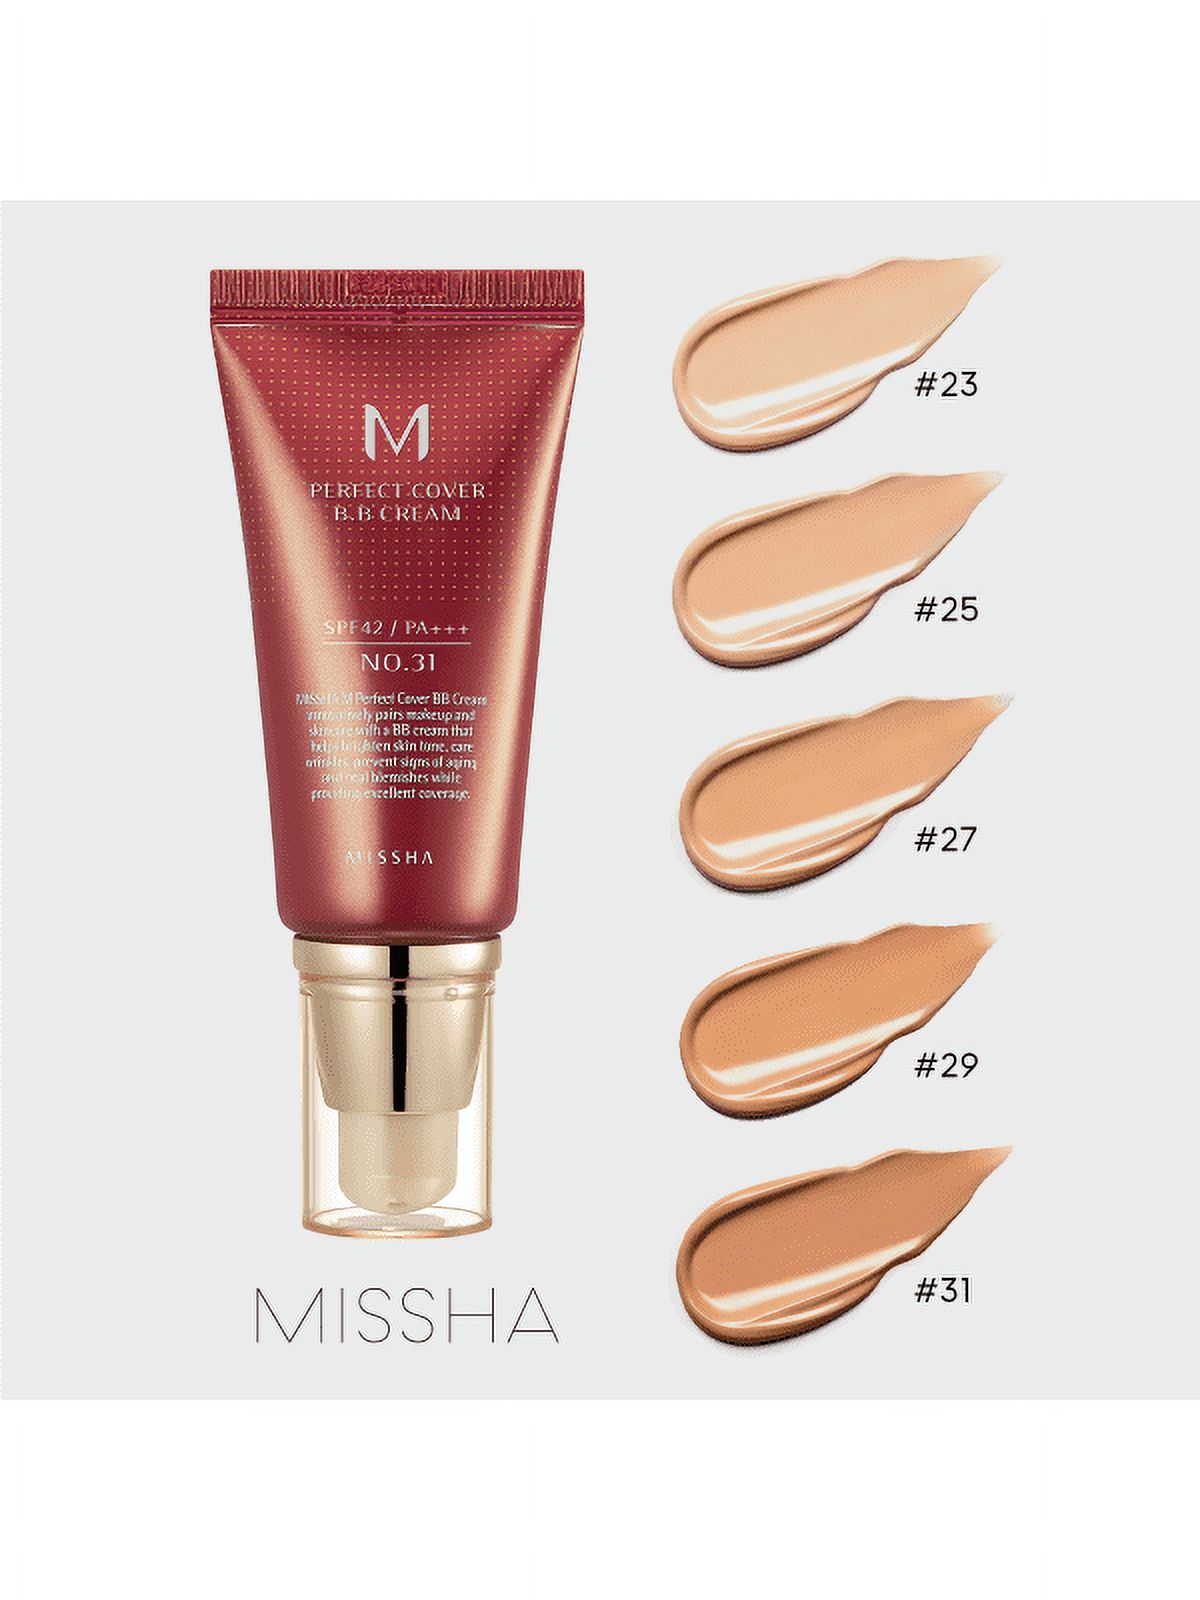 Missha M Perfect Cover BB Cream SPF42, PA #23 - Natural Beige, 1.69 fl oz - image 3 of 6